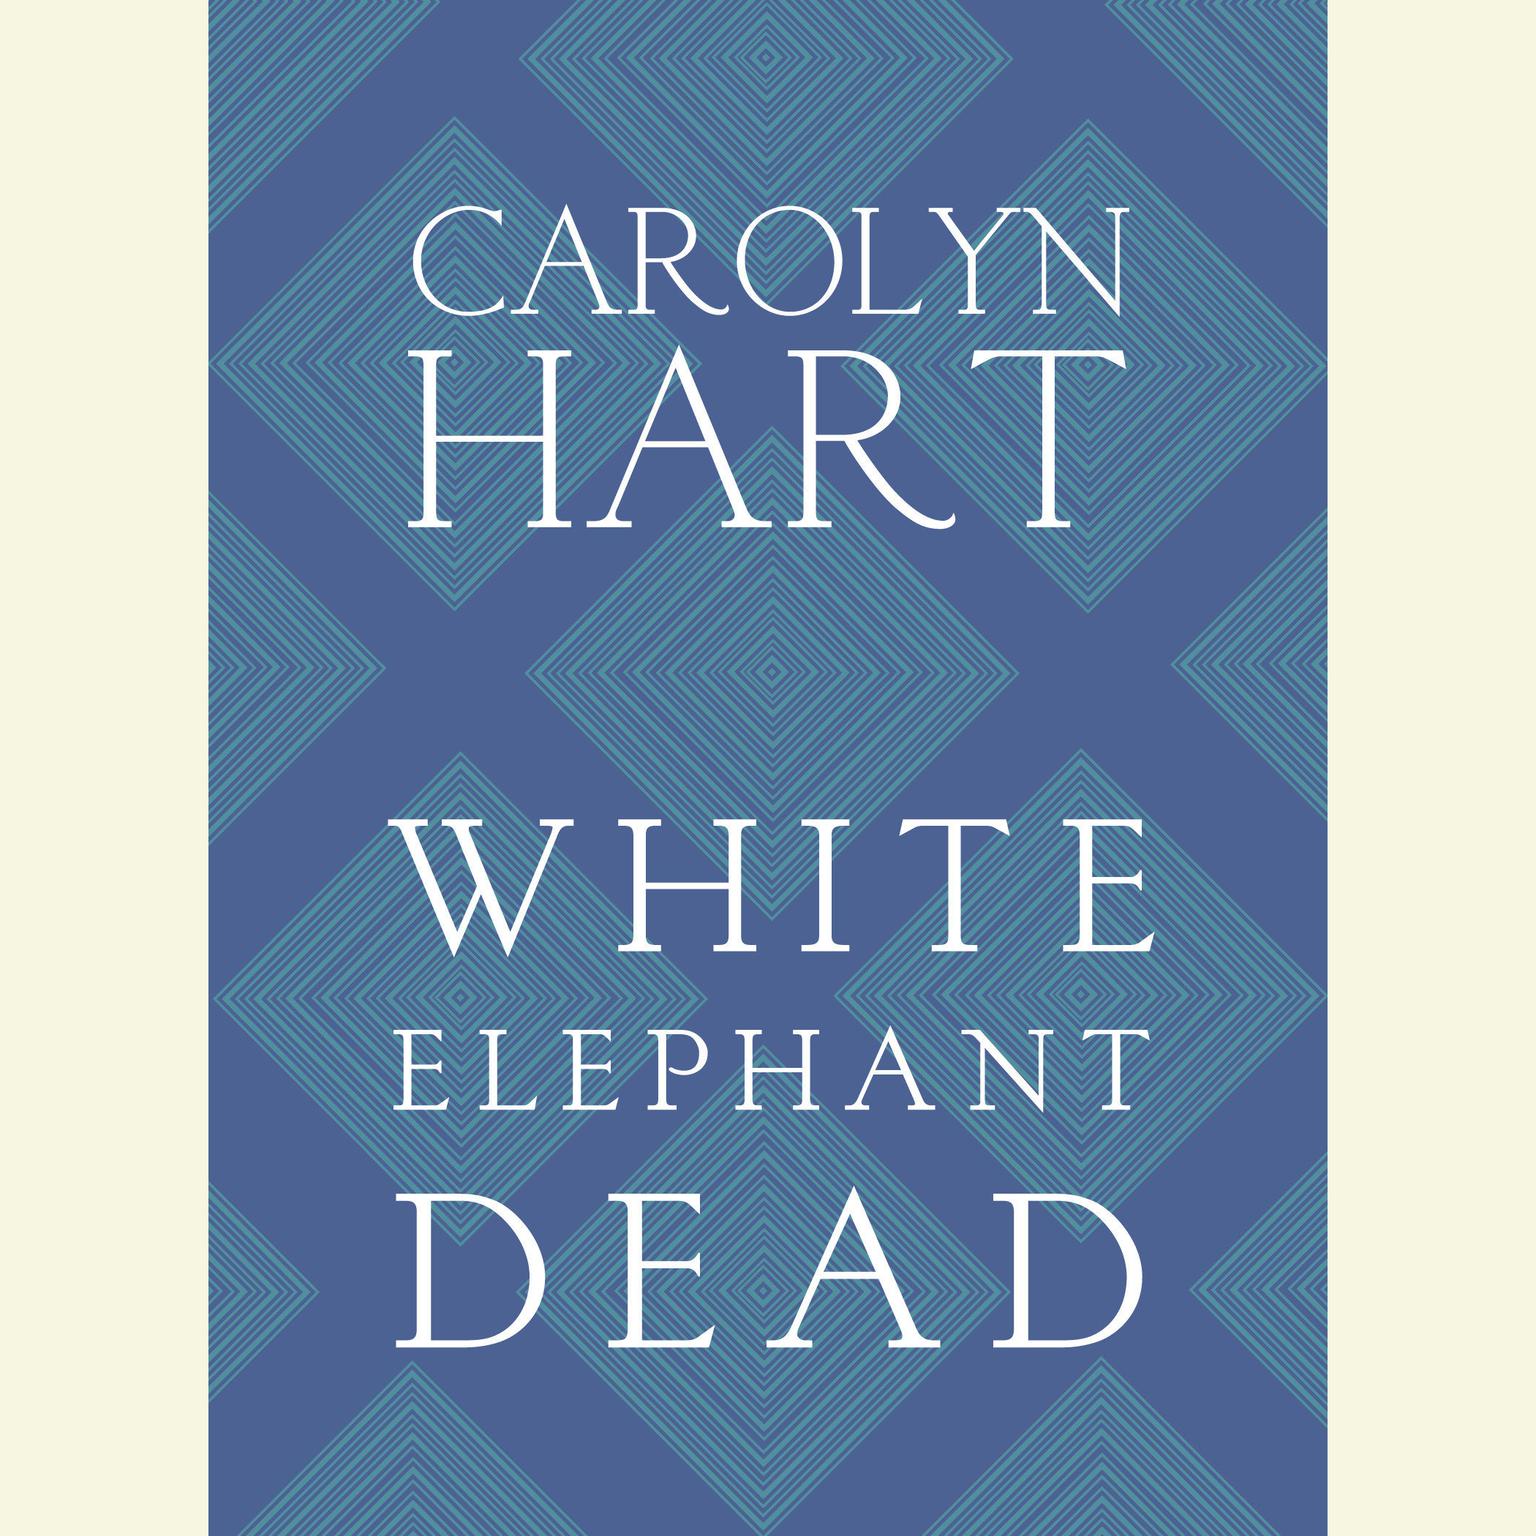 White Elephant Dead Audiobook, by Carolyn Hart